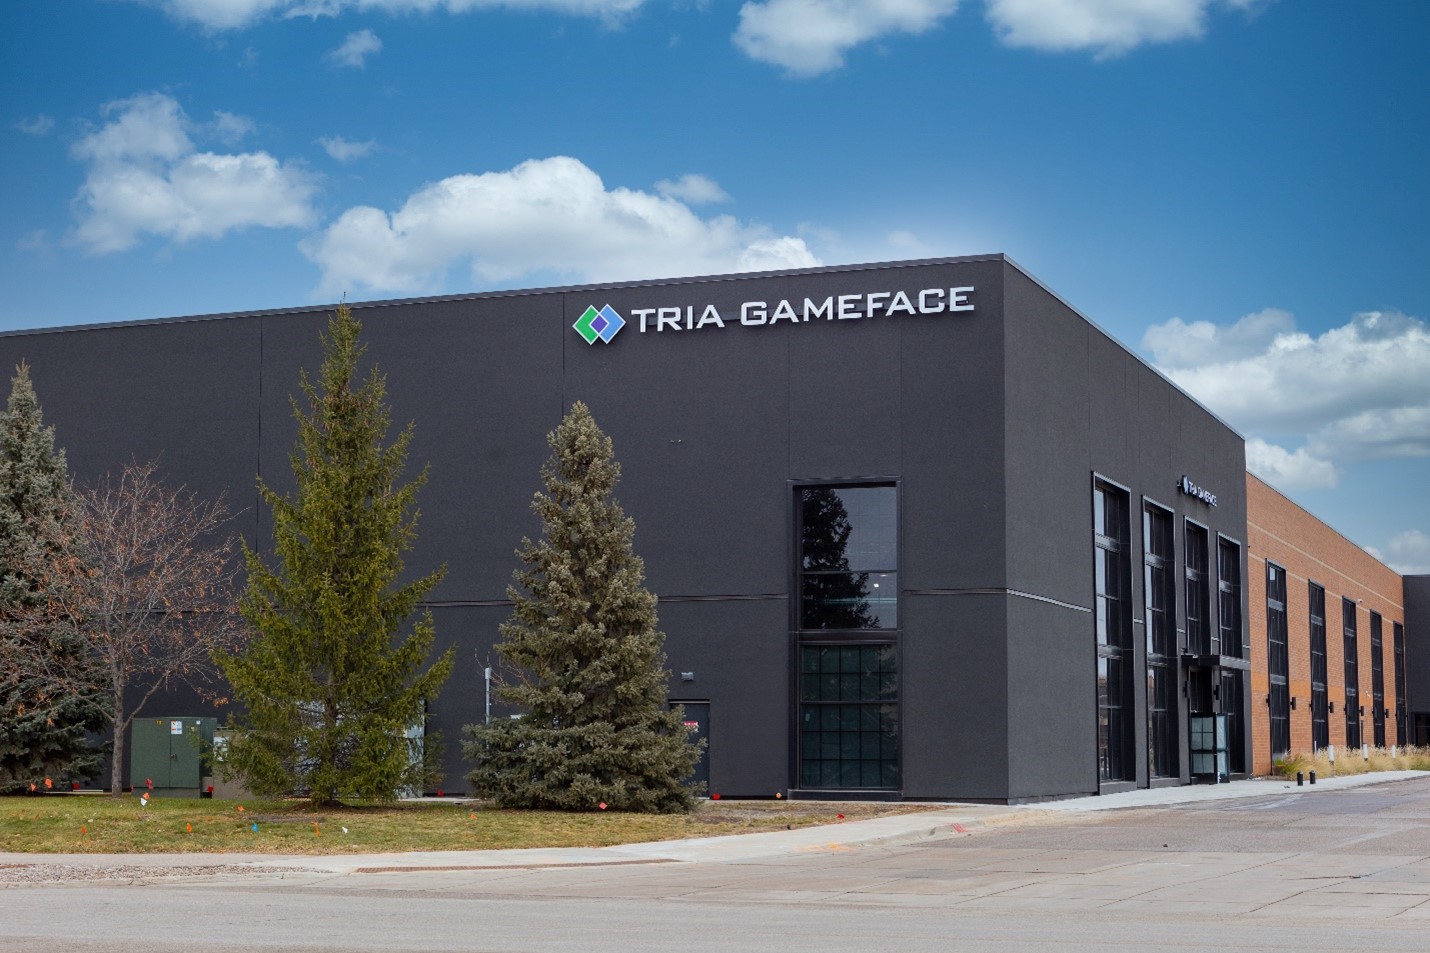 TRIA GameFace building